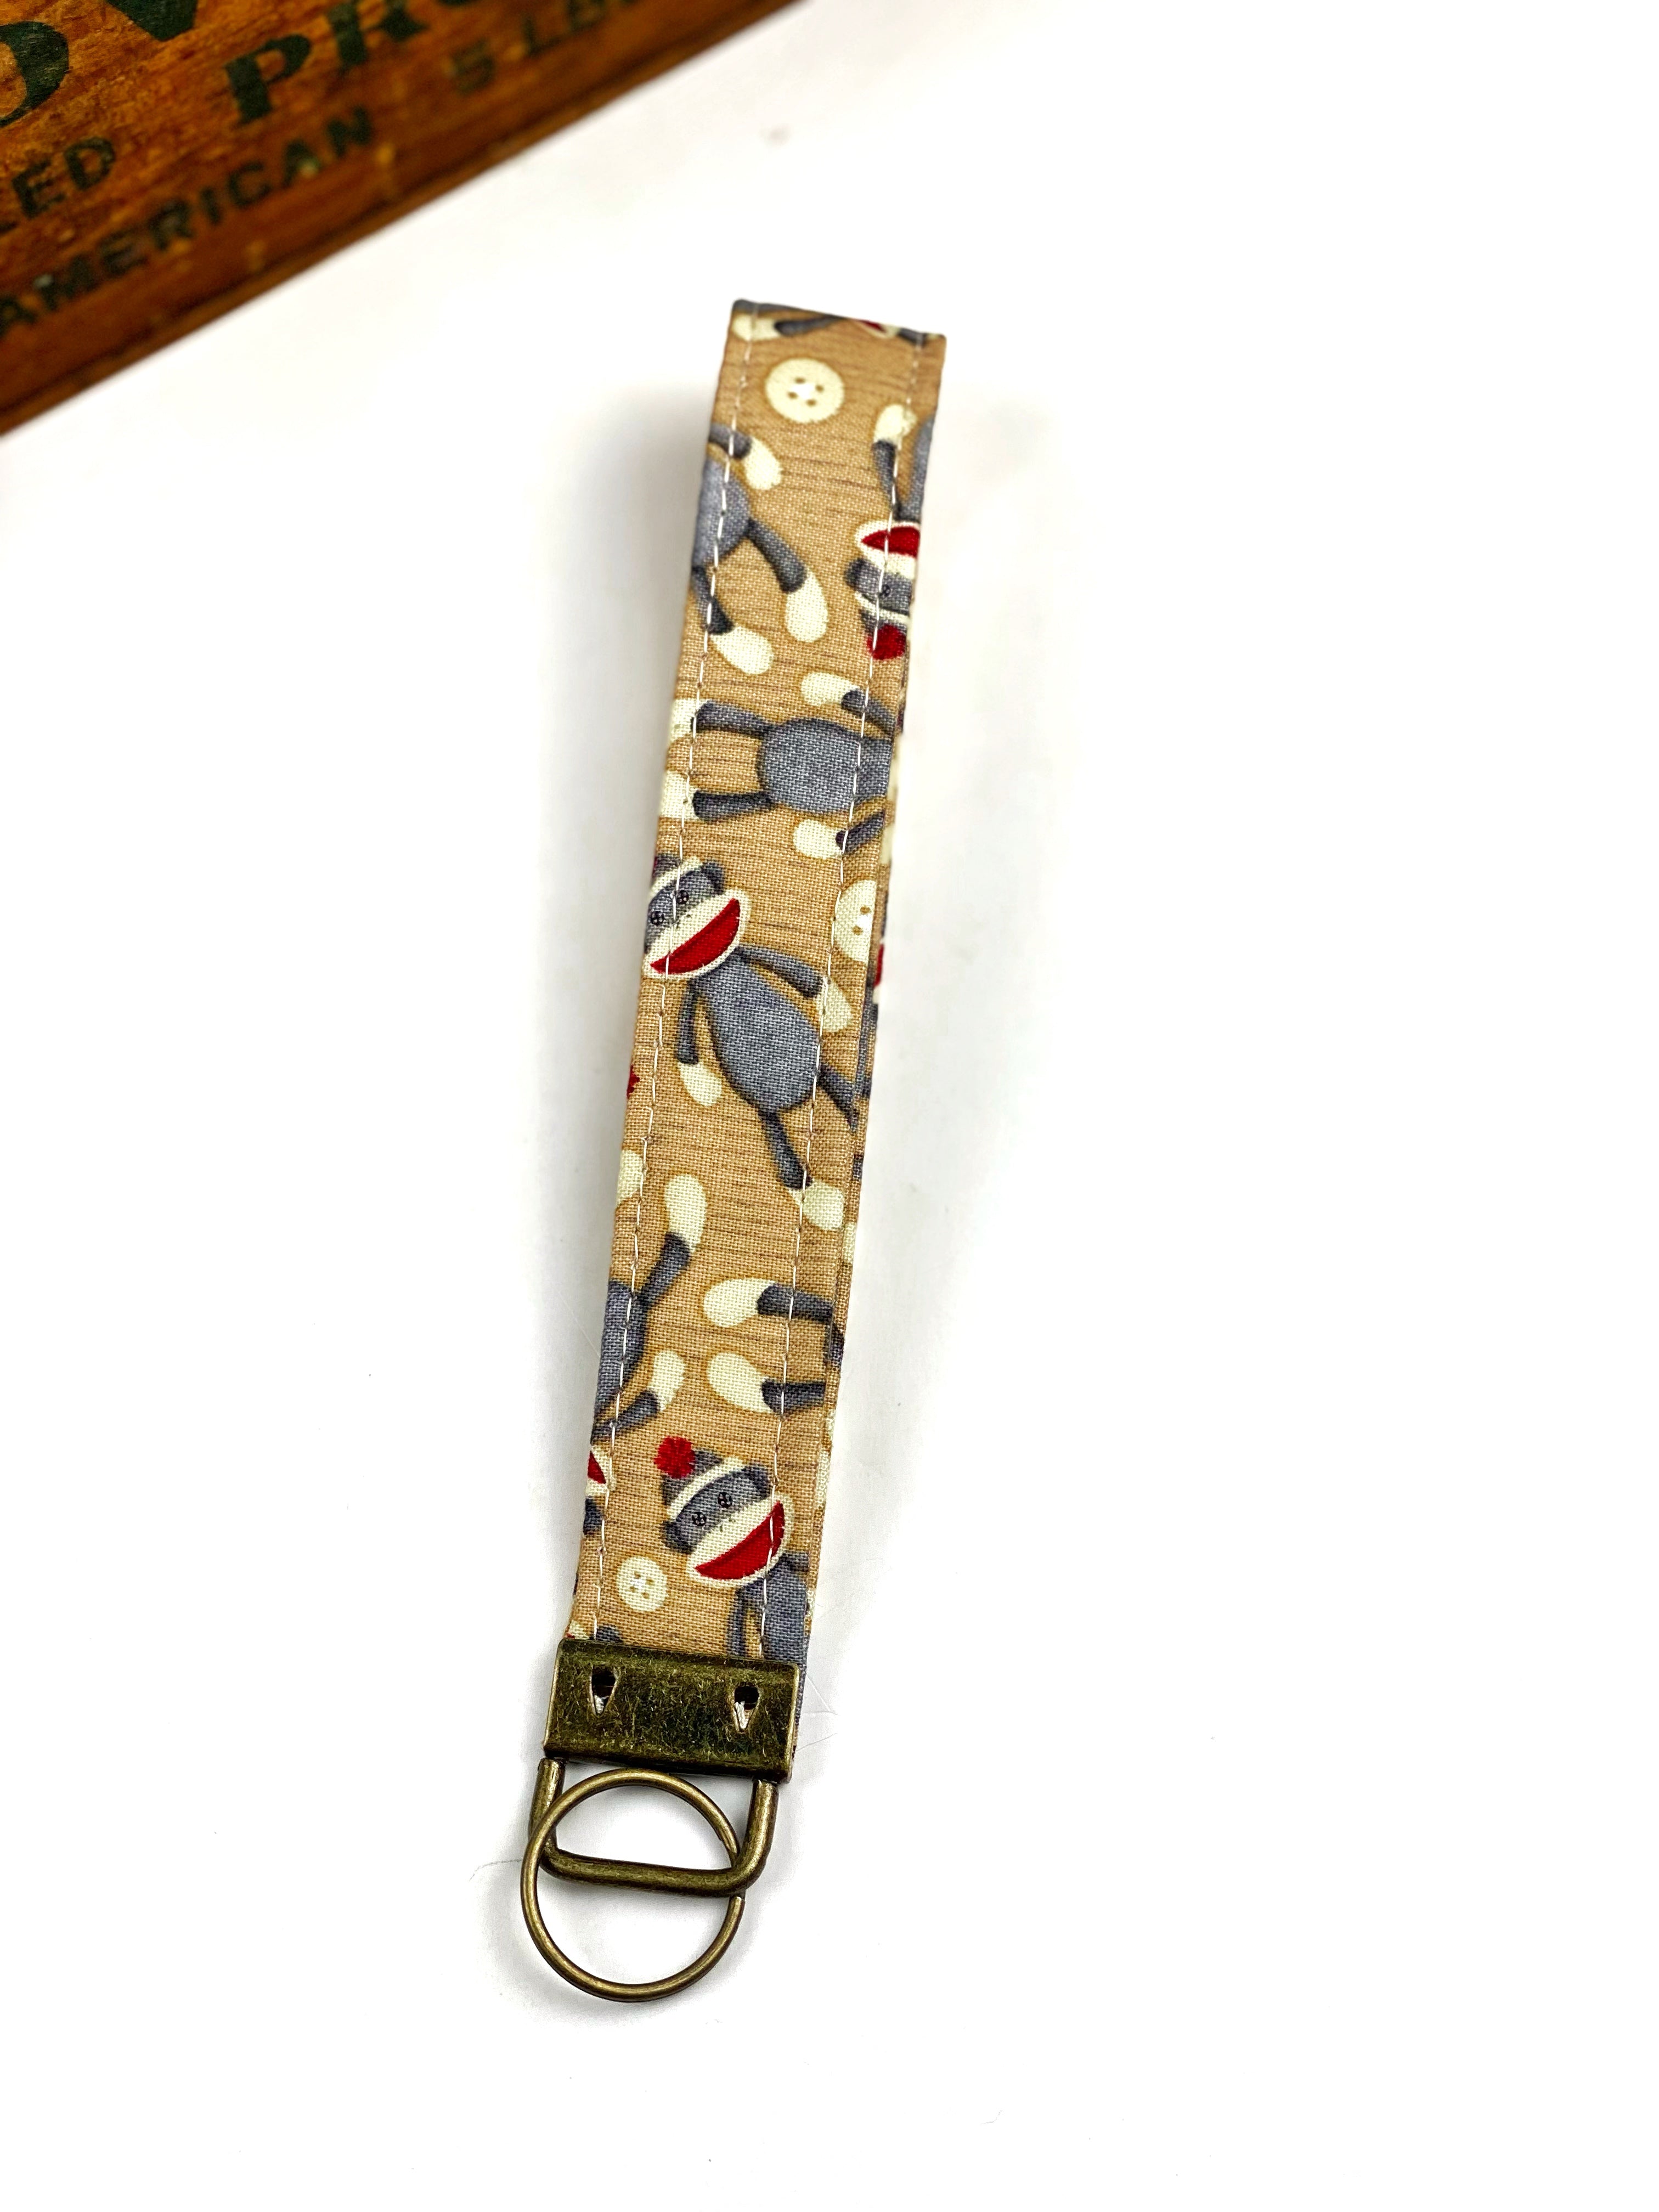 Assorted Cotton Wristlet Key Fob, Cotton Wrist Key Chain Holder, Cute Wristlet Keychain